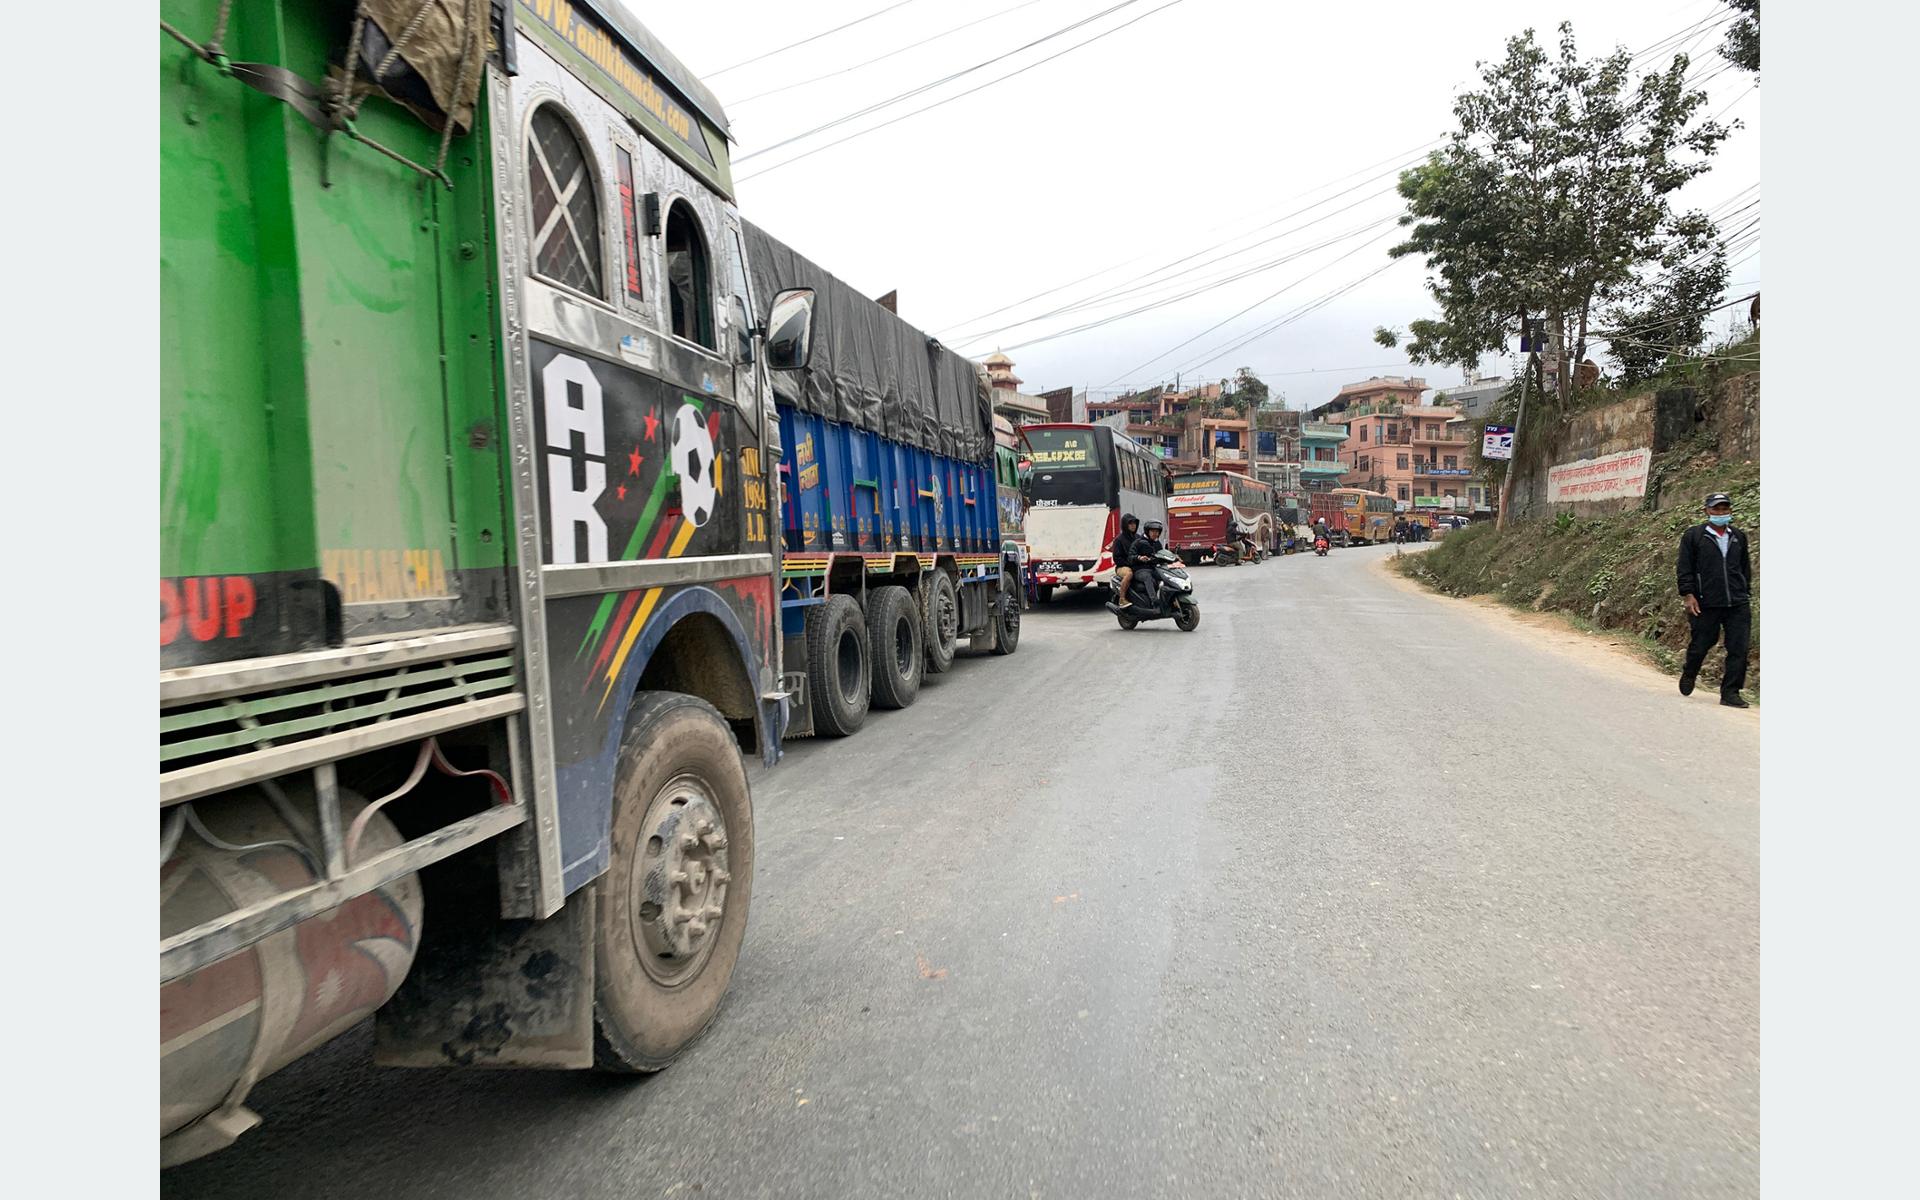 Nepal bandh has general effect